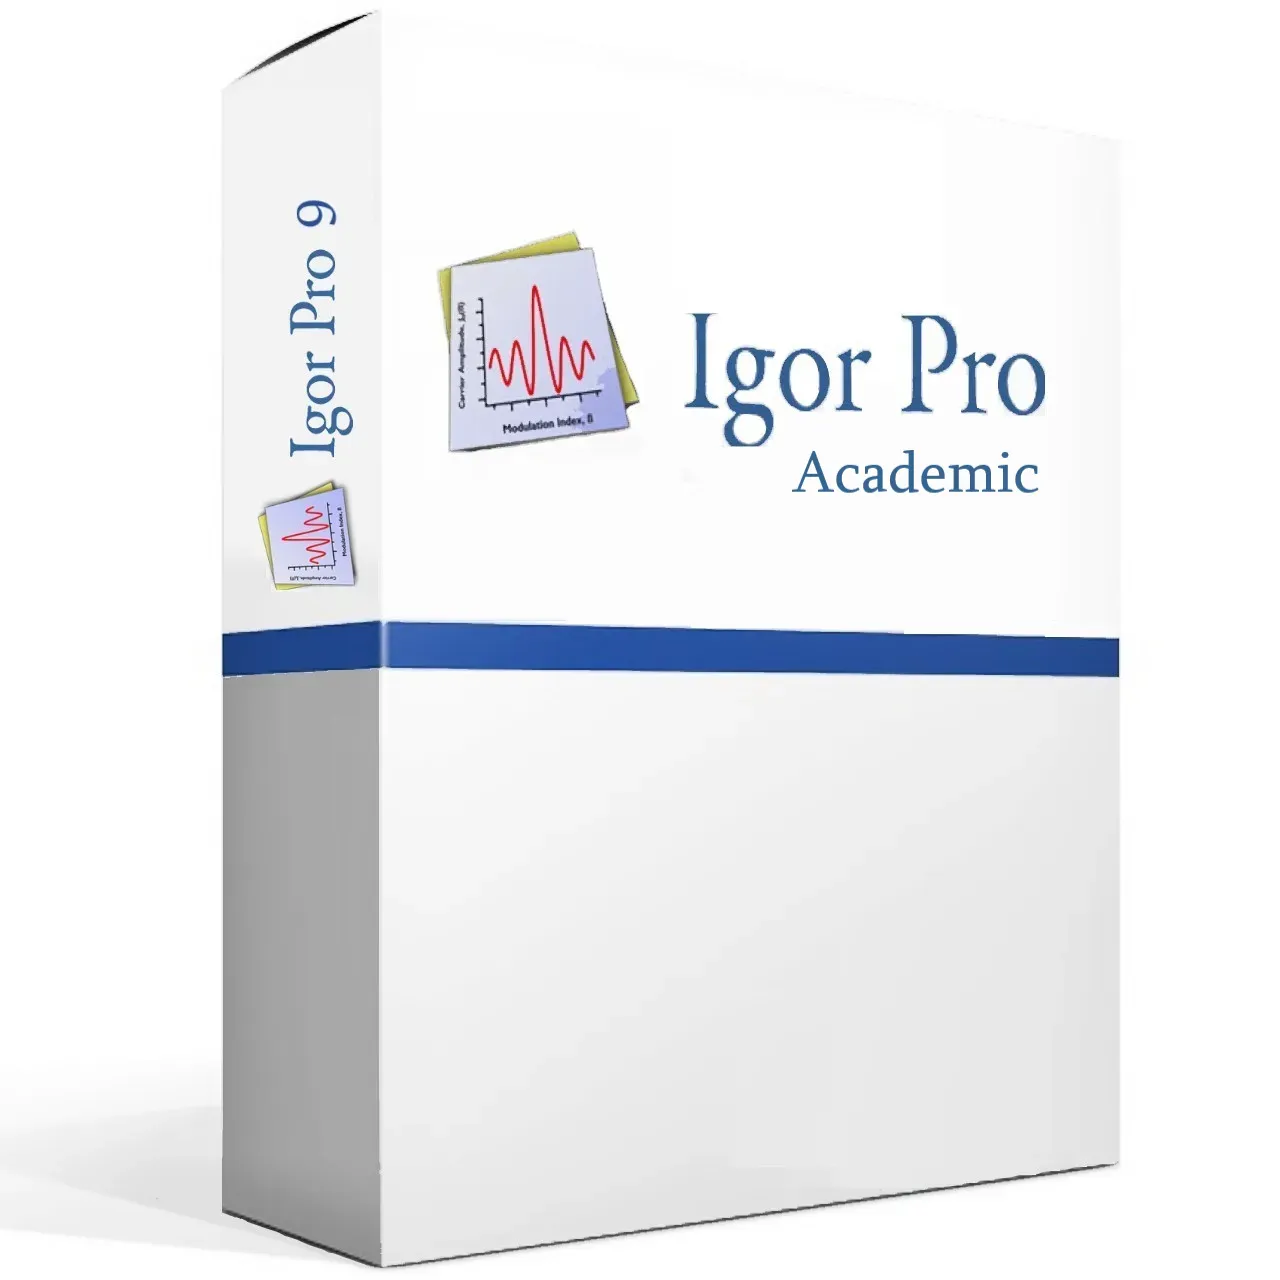 Igor Pro 9 Academic